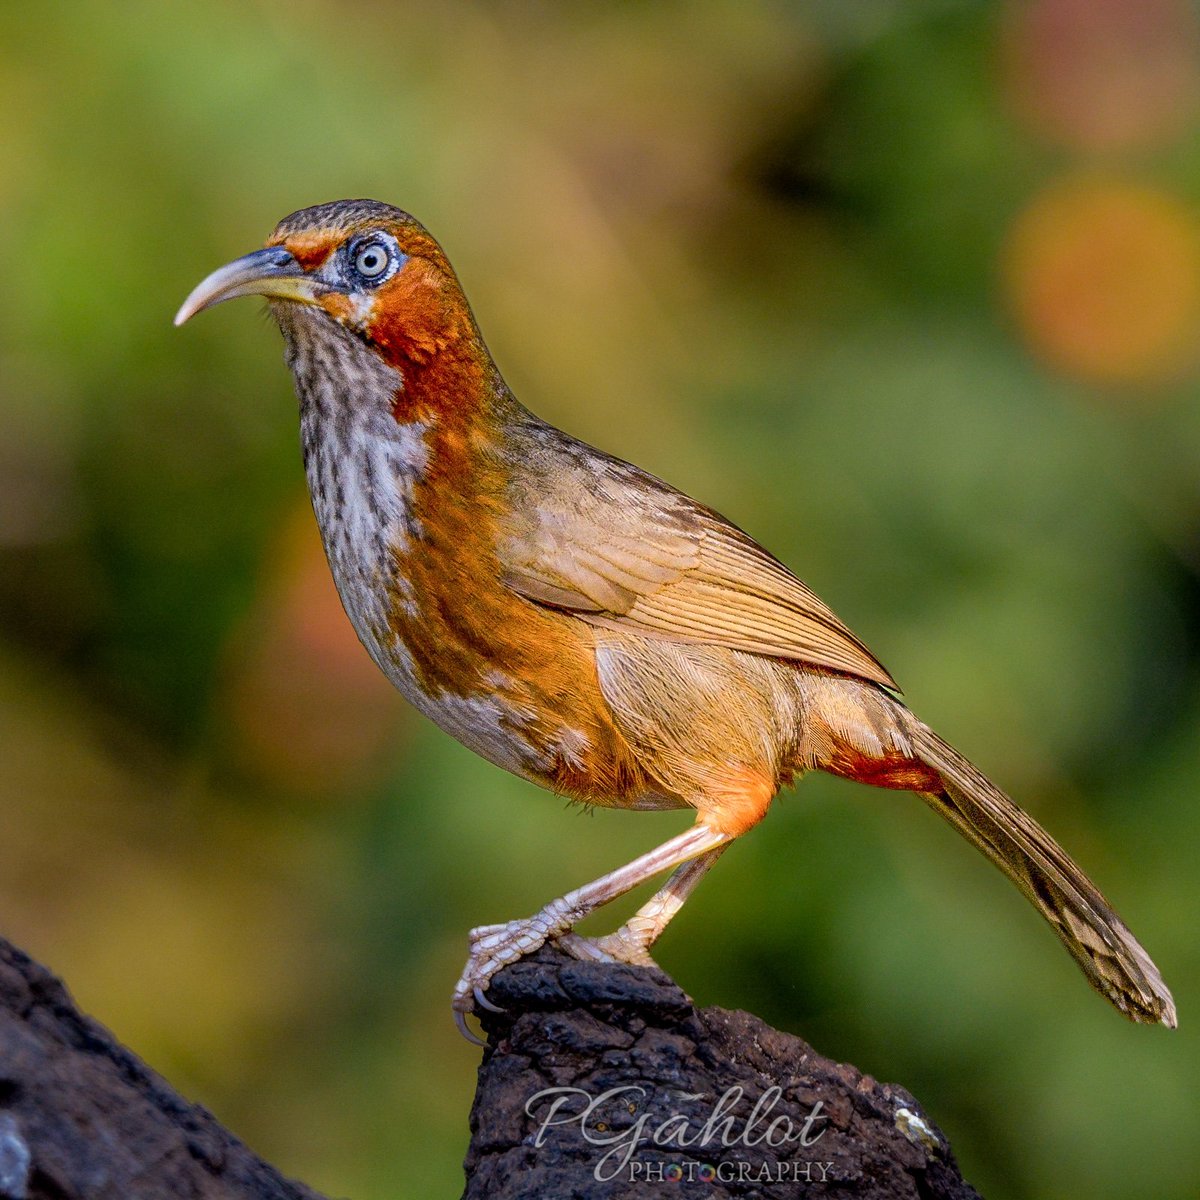 Rusty-cheeked scimitar #babbler
Sattal, UK 🇮🇳 
#BirdsOfTwitter #IndiAves #nature #birdphotography #ThePhotoHour #BBCWildlifePOTD #BirdsofIndia #birdwatching #twitterbirds #birdpics #Asianbirds #birds #birdsoftheworld #birdnames_en #NaturePhotograhpy  #nikonphotography #BIRDSTORY